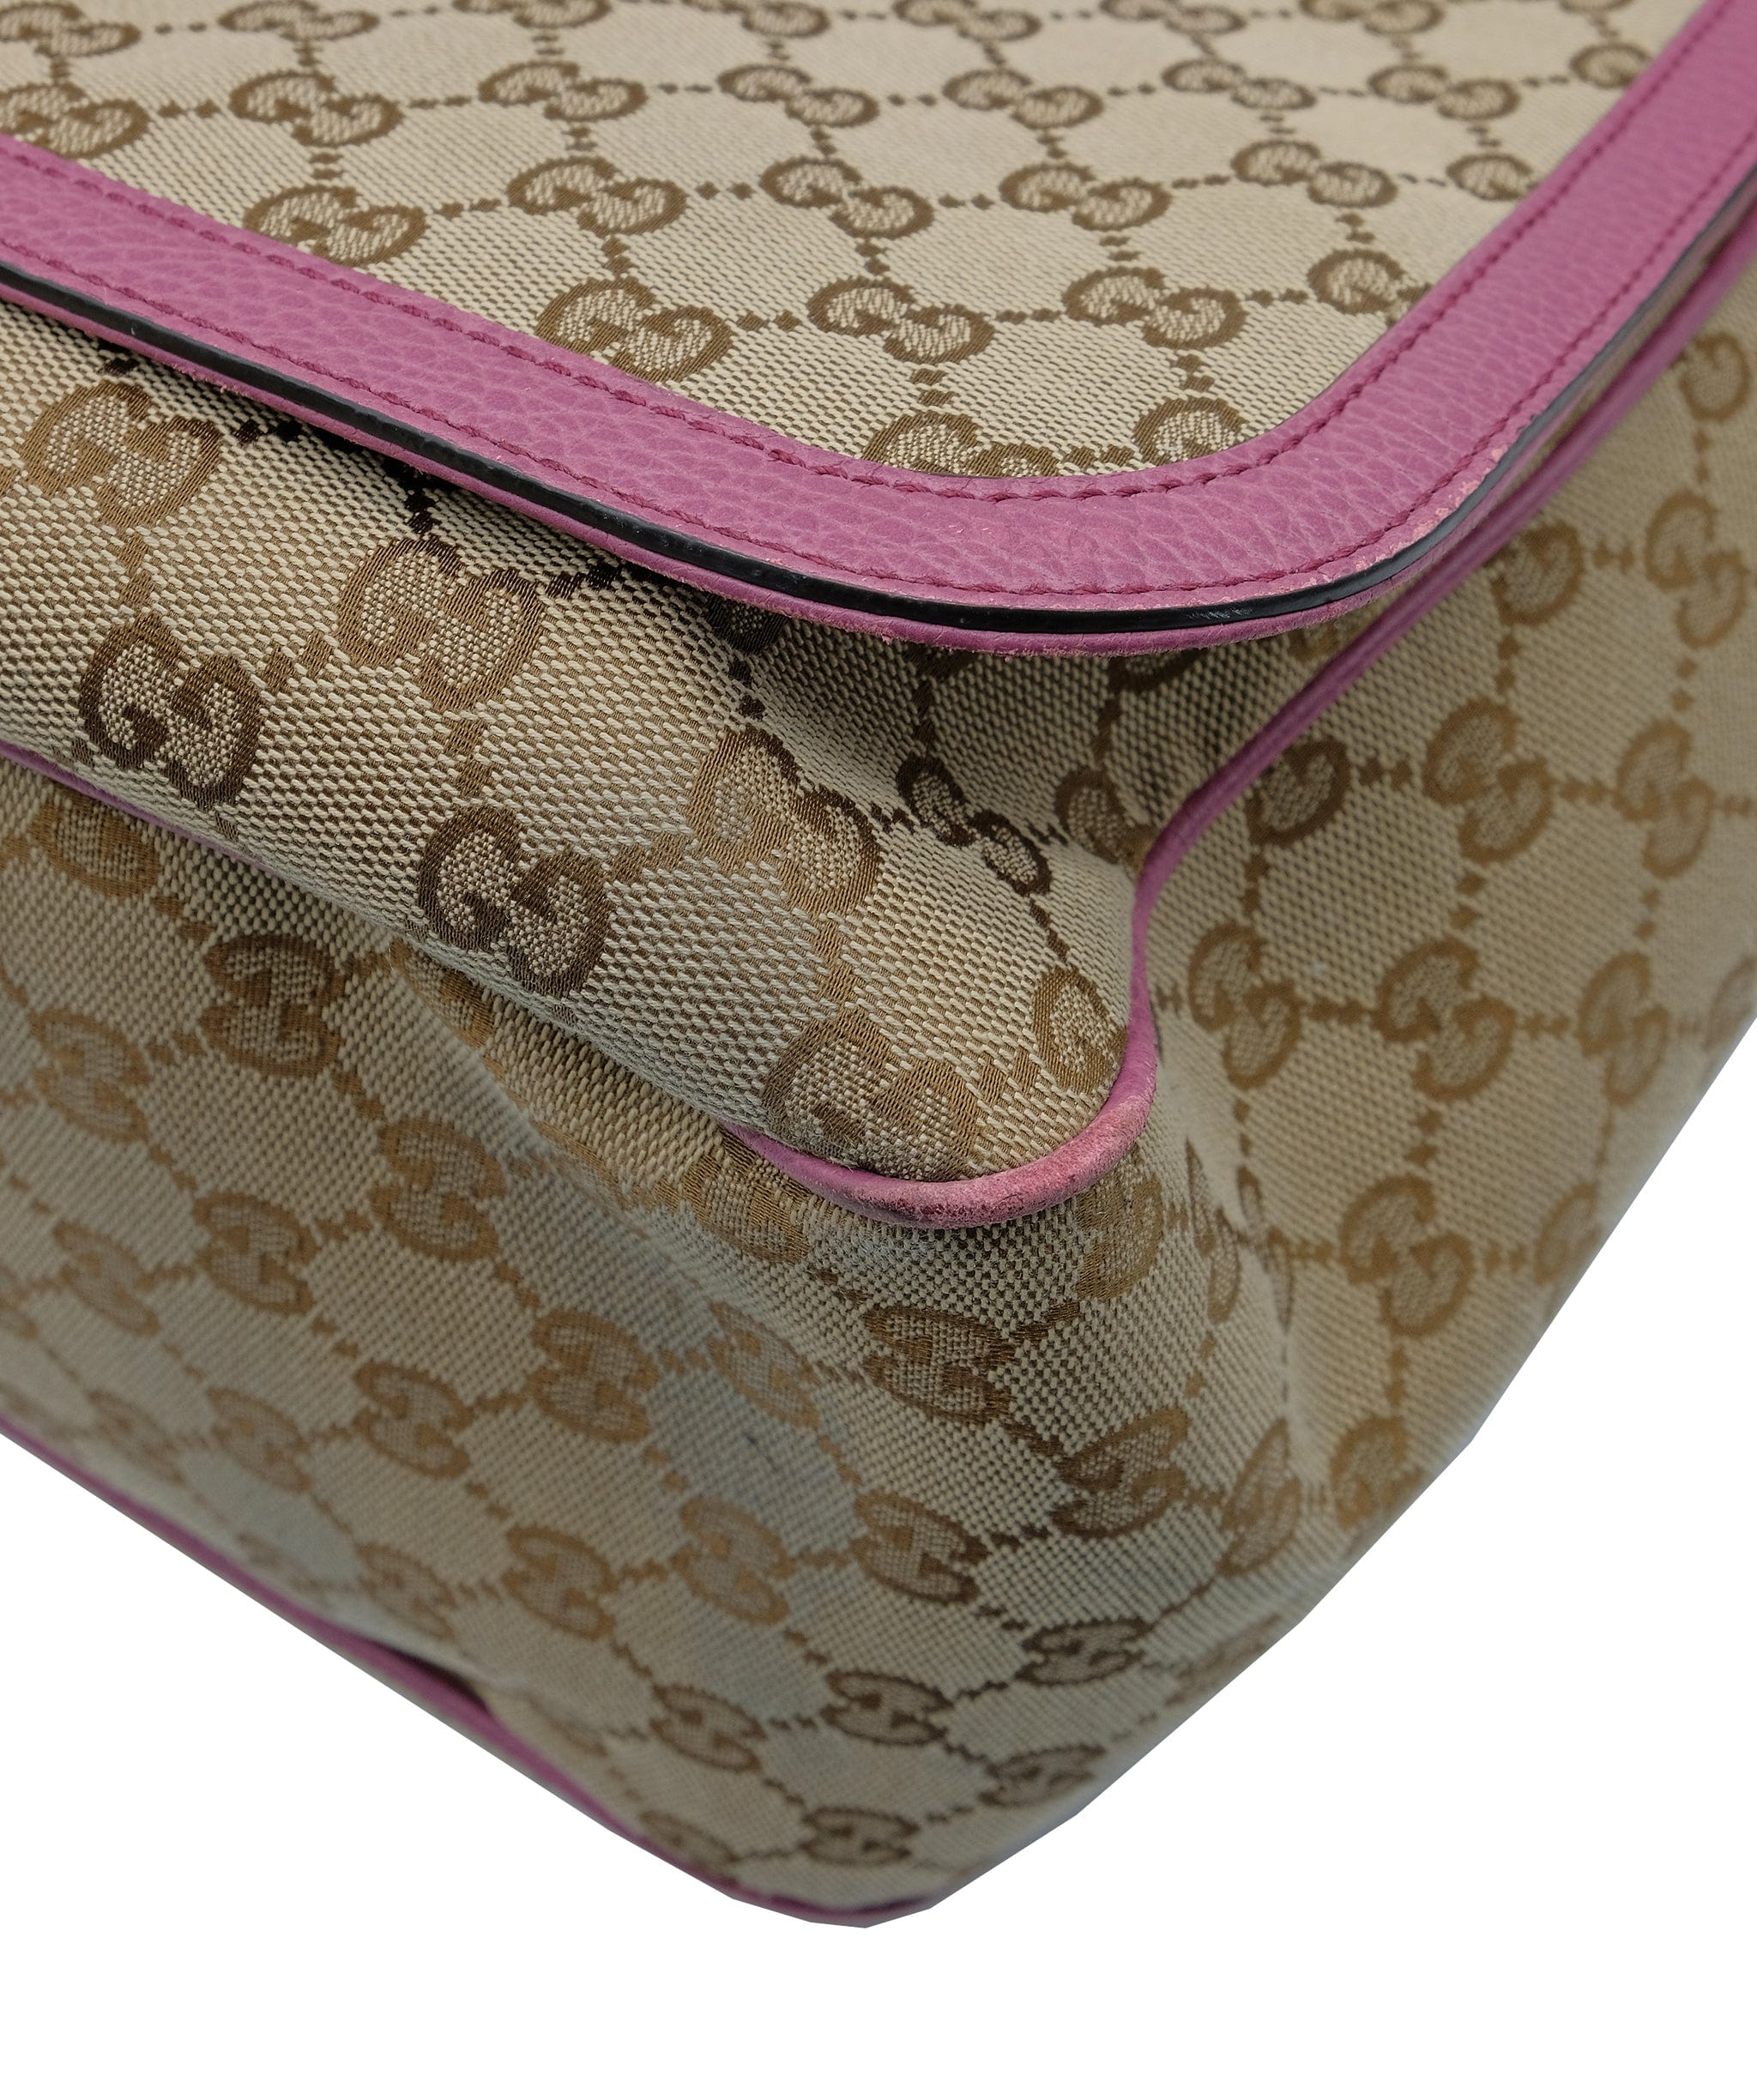 Gucci Gucci Baby Bag Pink RJC2257